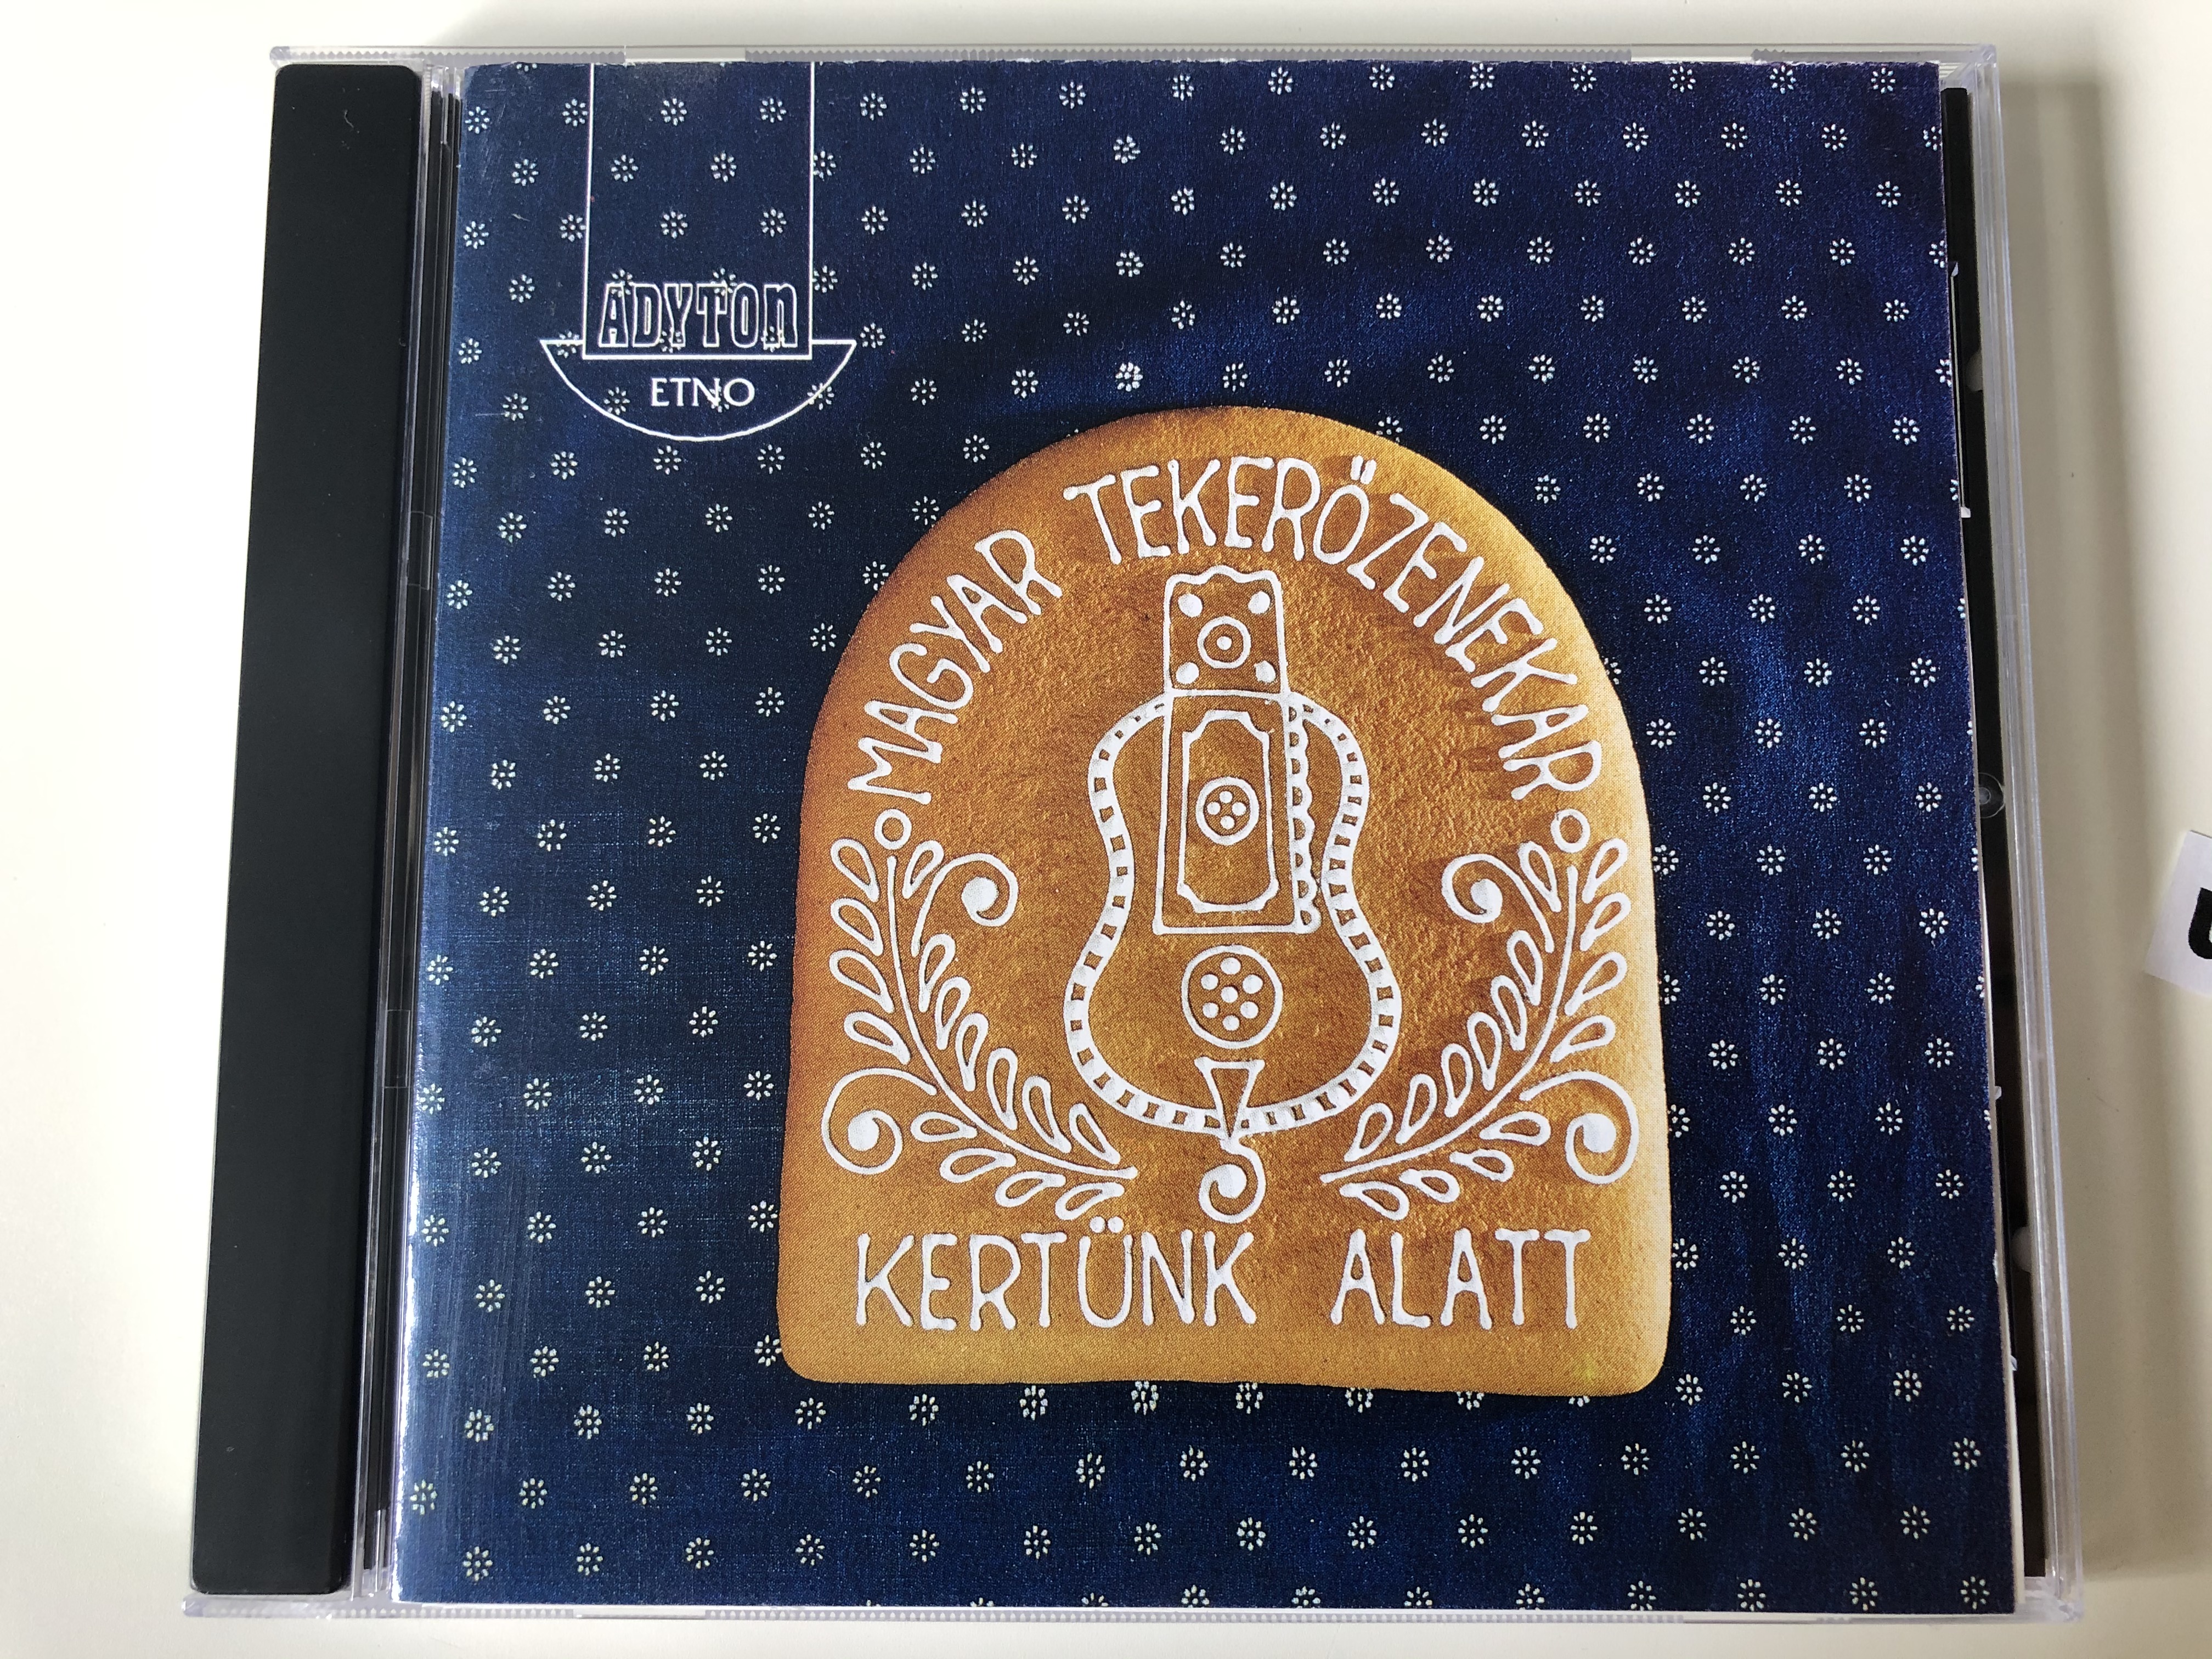 magyar-teker-zenekar-kert-nk-alatt-fon-records-audio-cd-1997-e01-1-.jpg